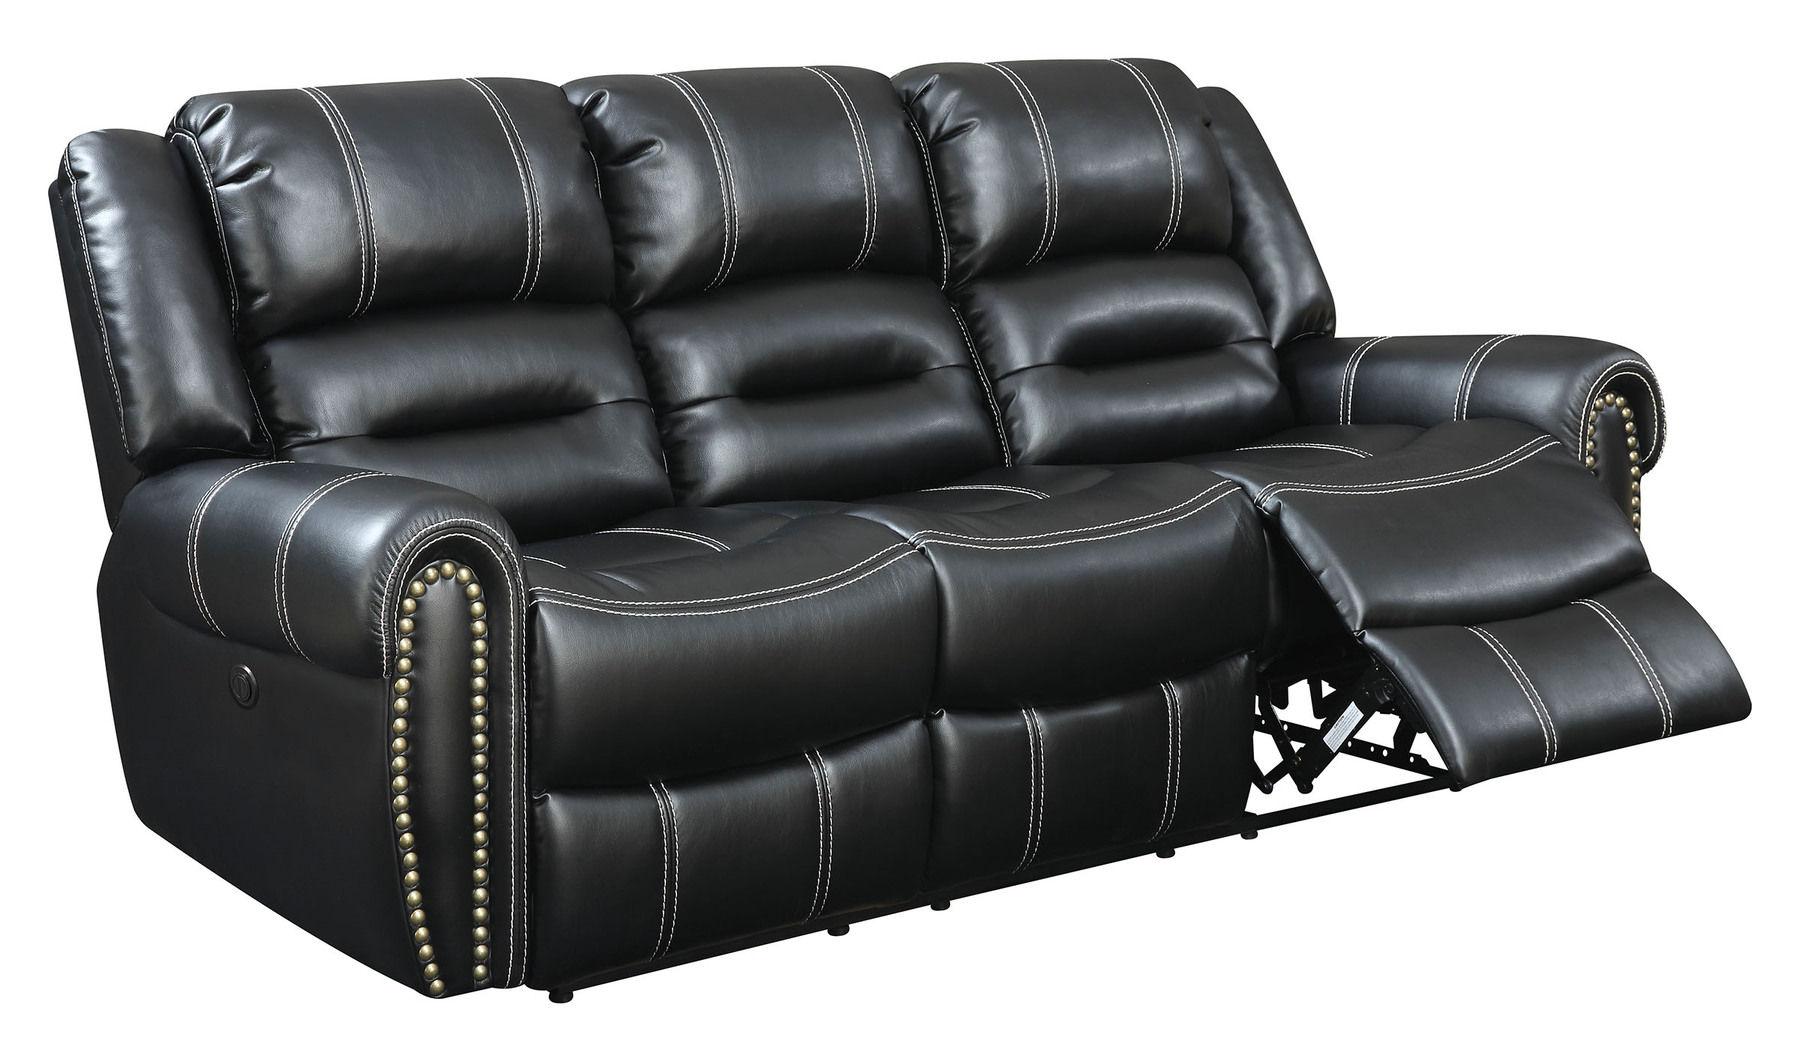 Transitional Recliner Sofa FREDERICK CM6130-SF CM6130-SF in Black 